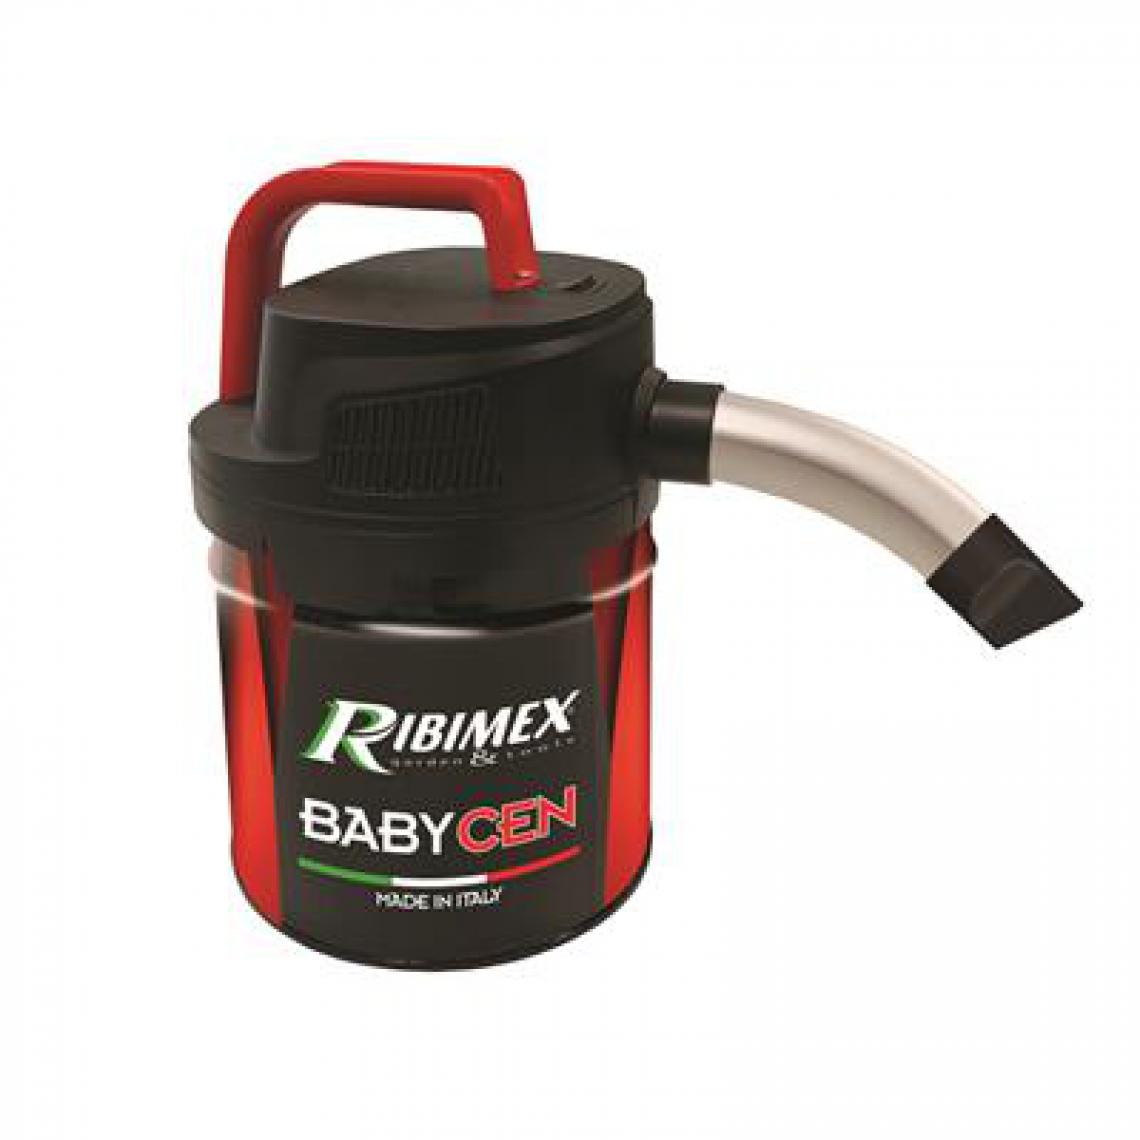 Ribimex - Aspirateur cendres babycen 500 watts bidon 4 litres spécial pellet - Aspirateurs industriels